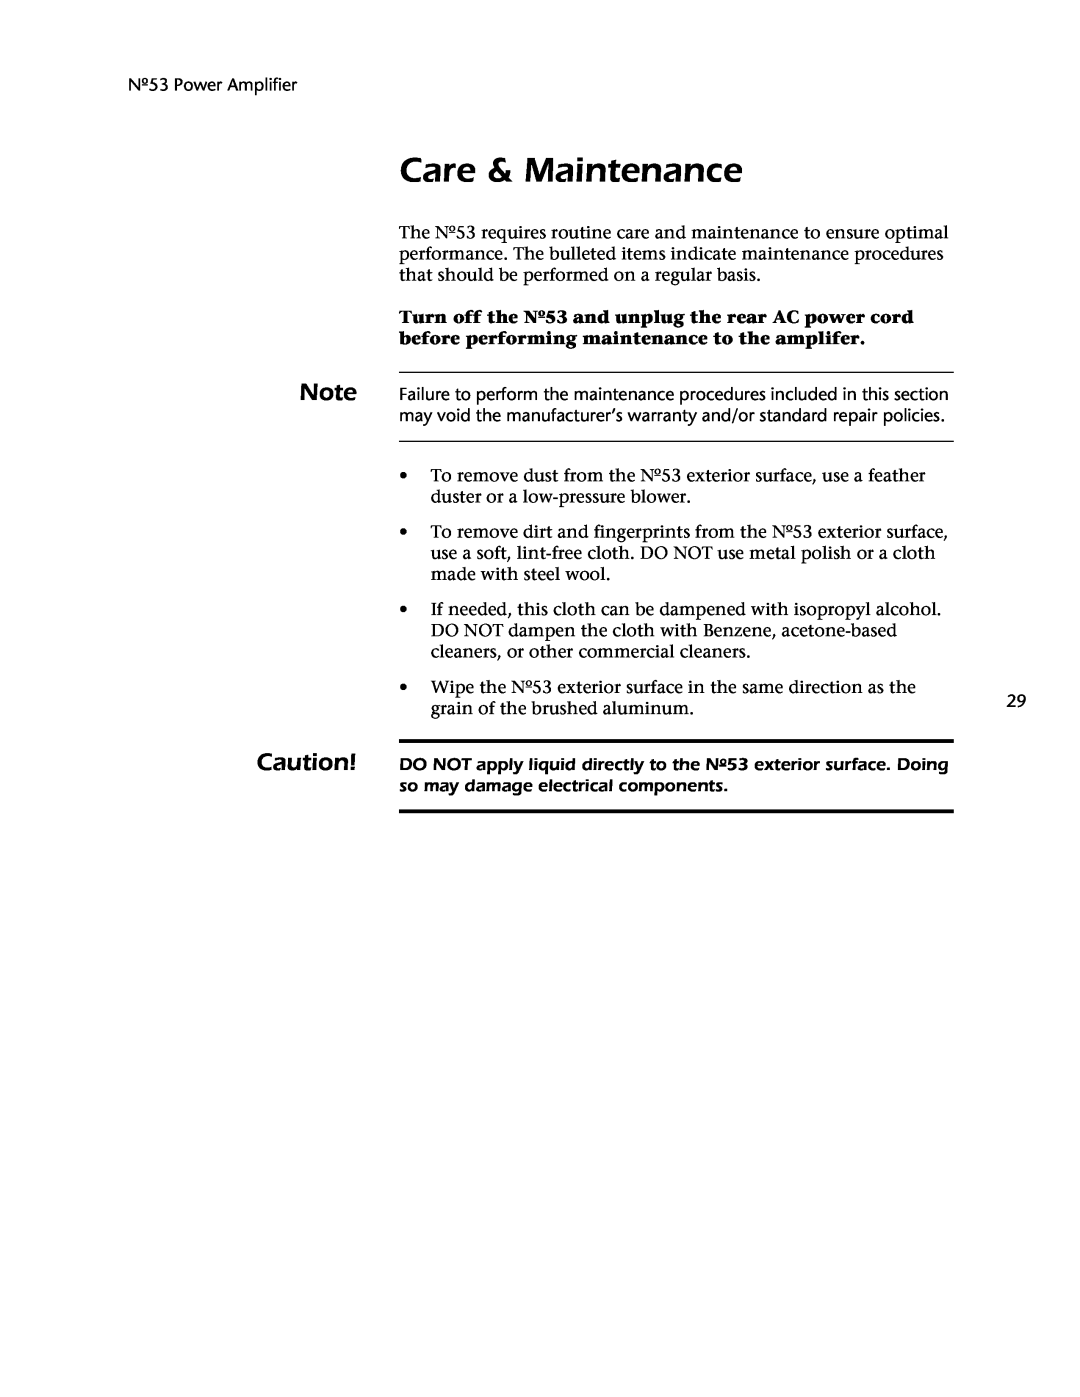 Mark Levinson 53 owner manual Care & Maintenance 